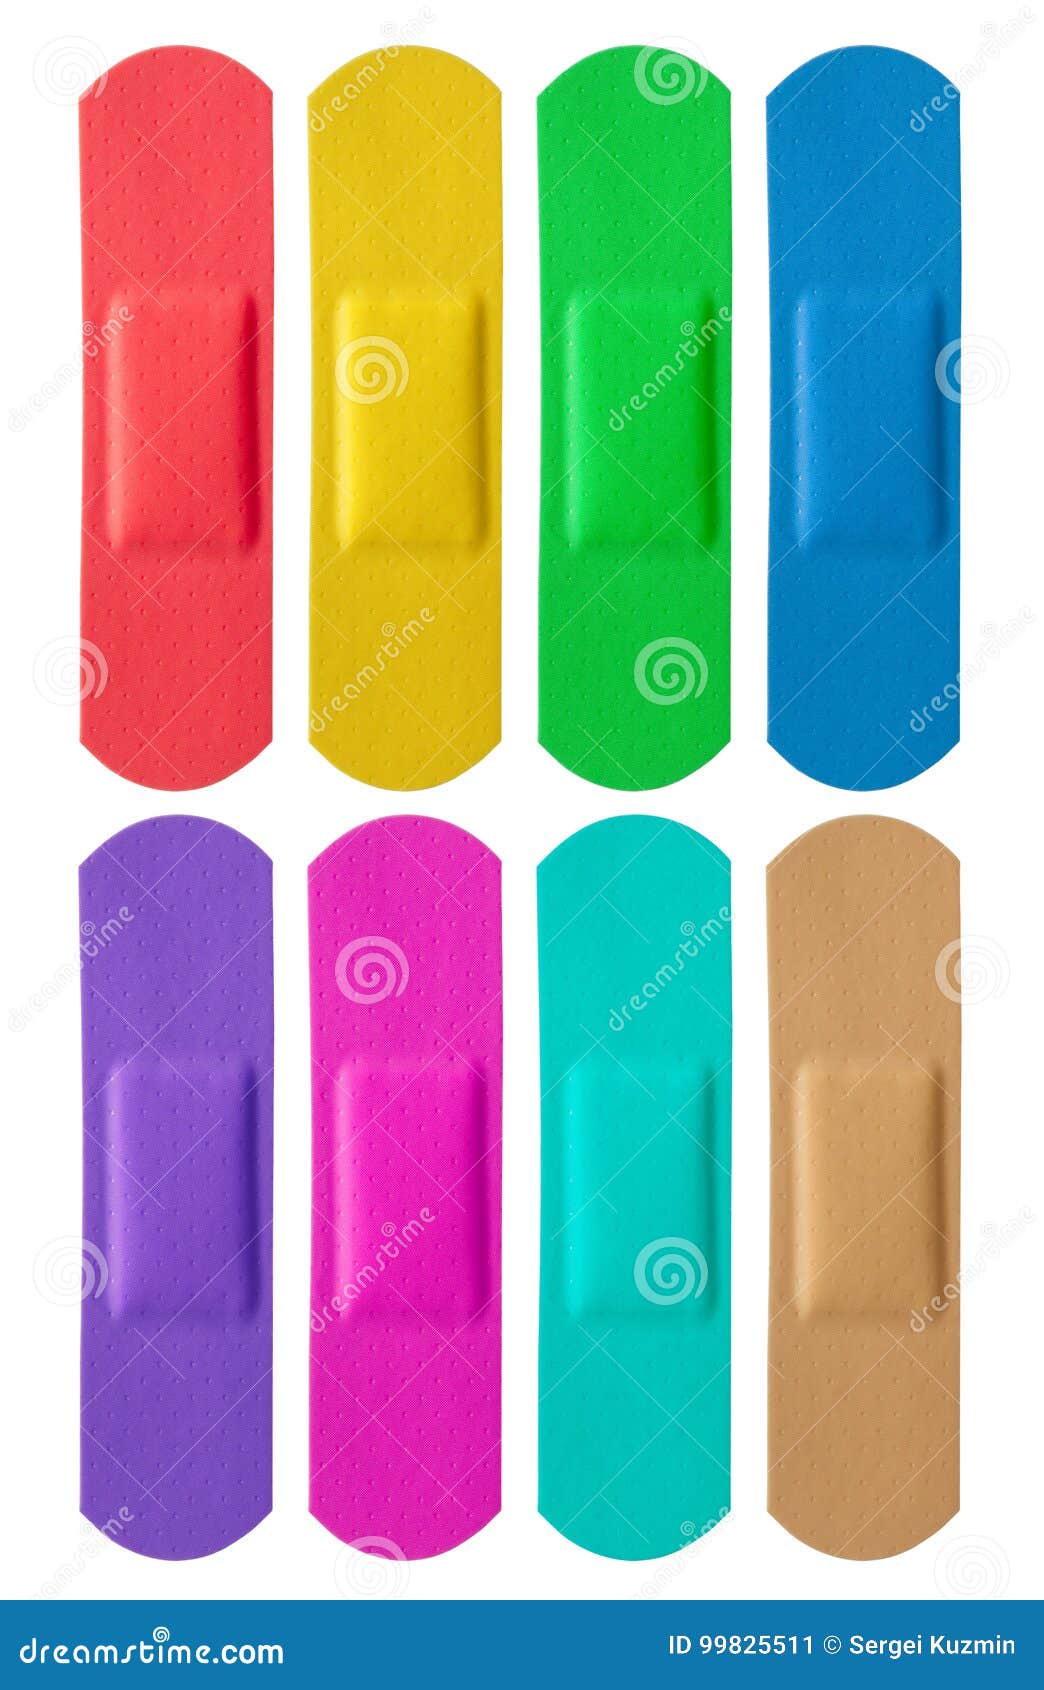 set of colorful medical bandages